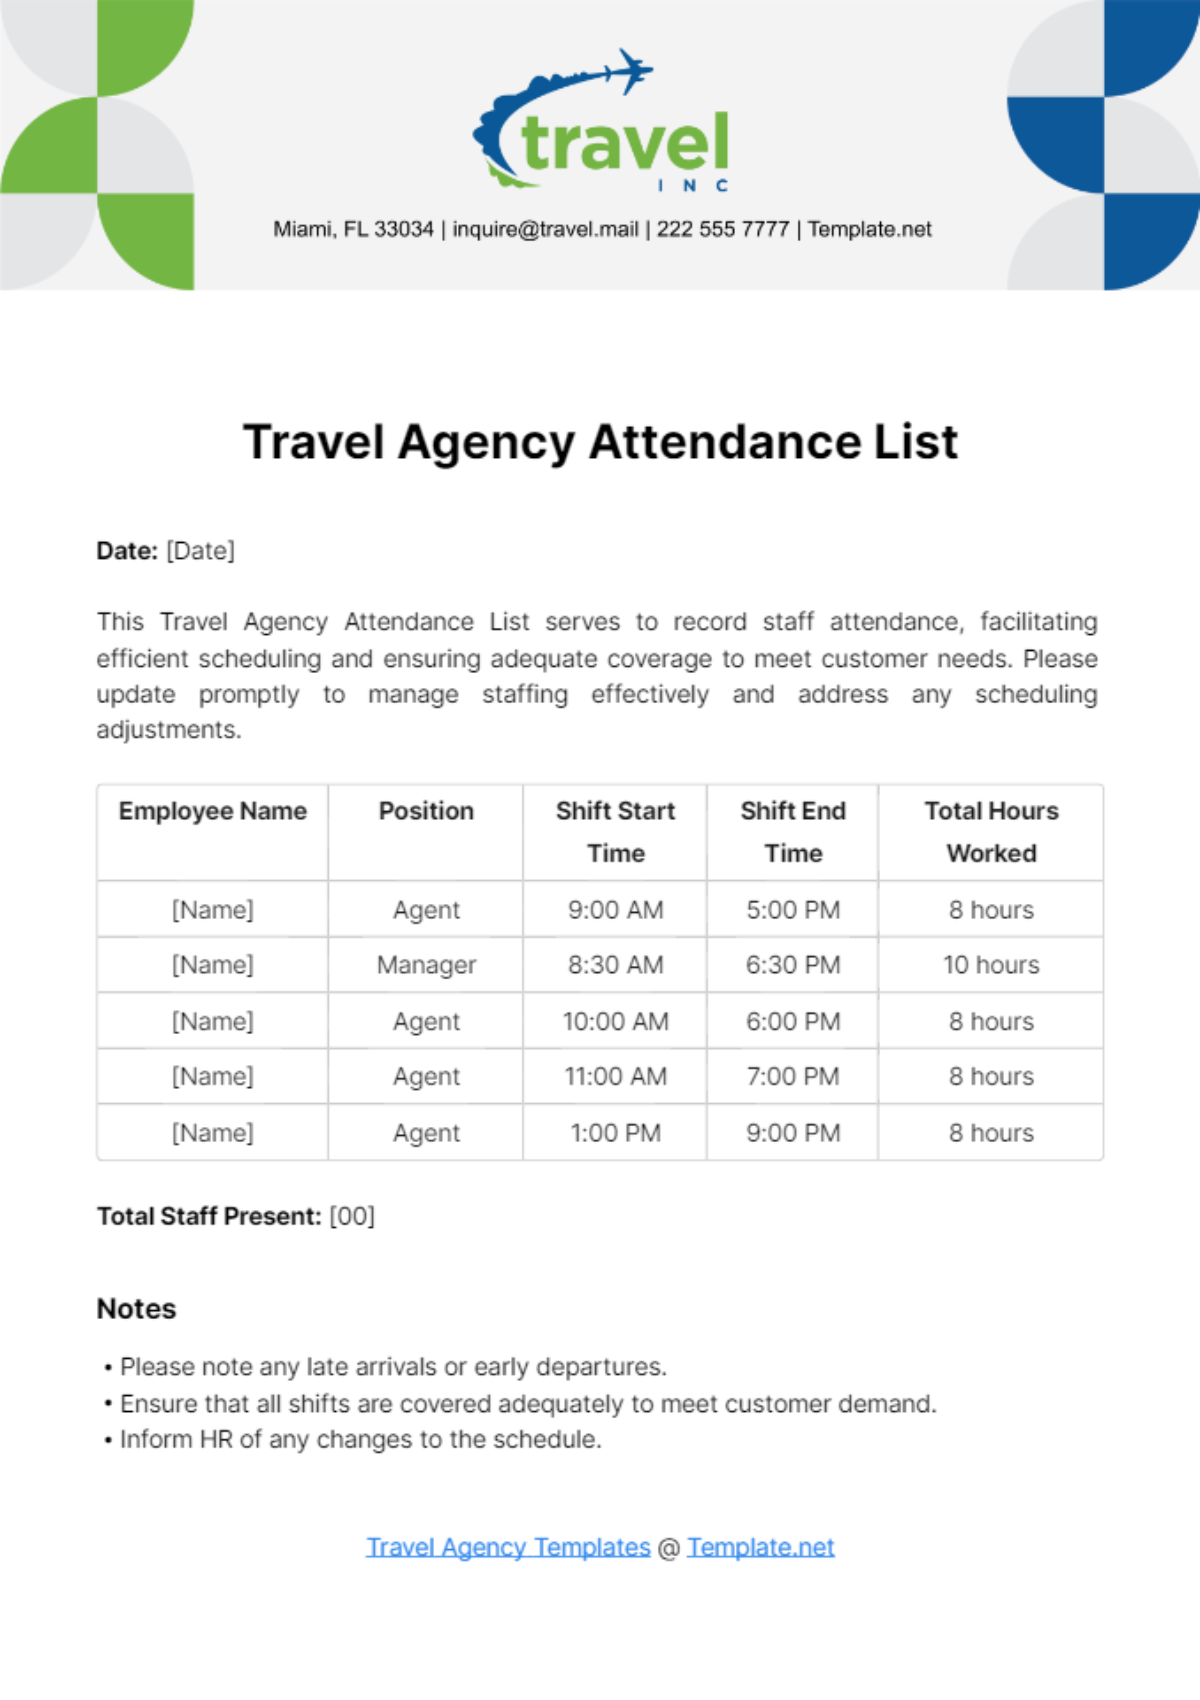 Free Travel Agency Attendance List Template